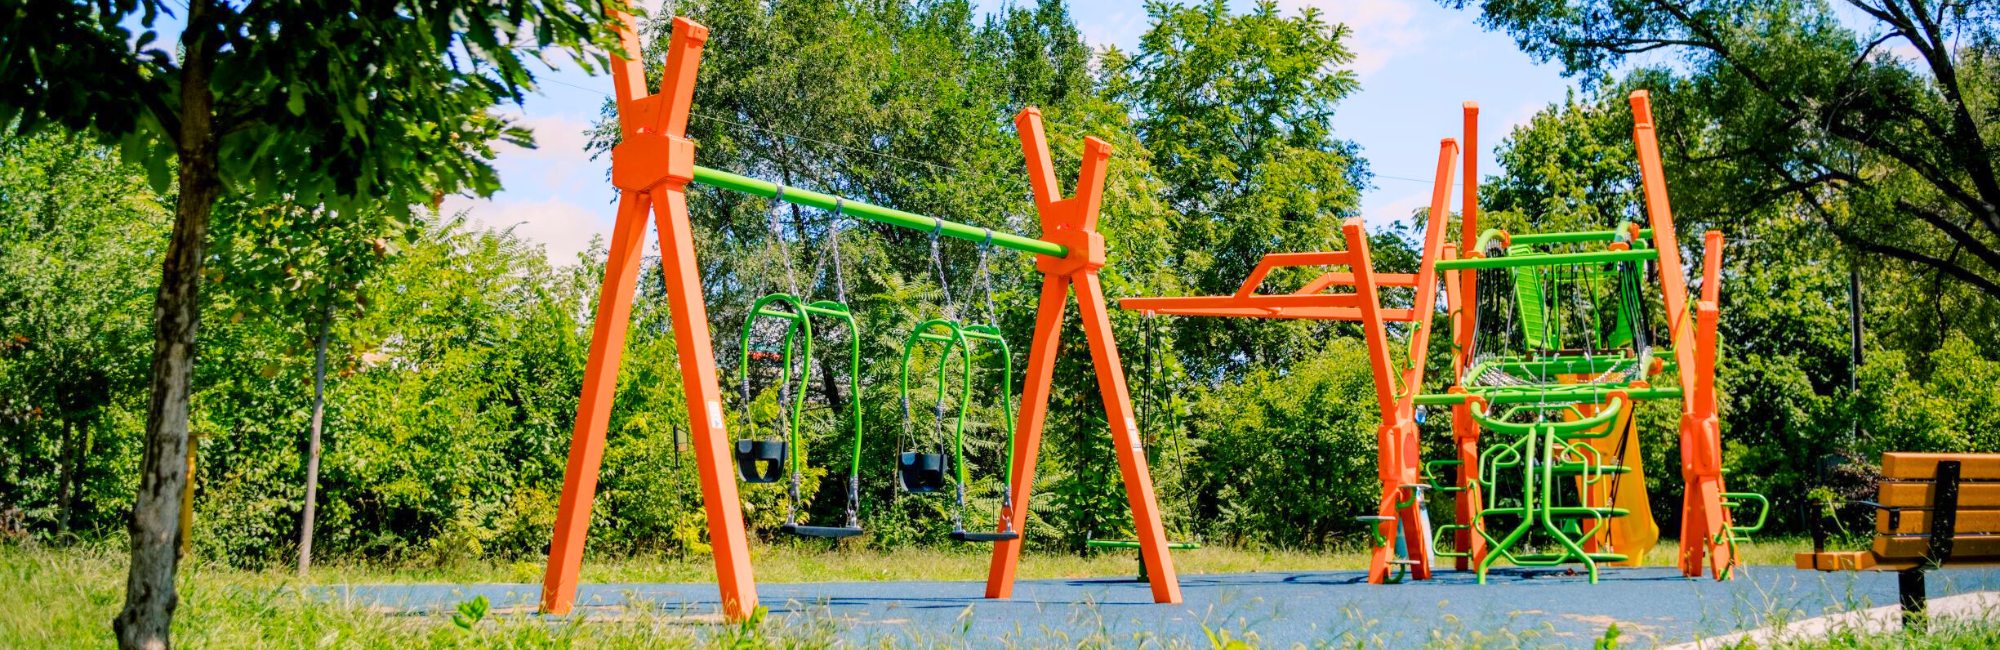 vibrant park playground